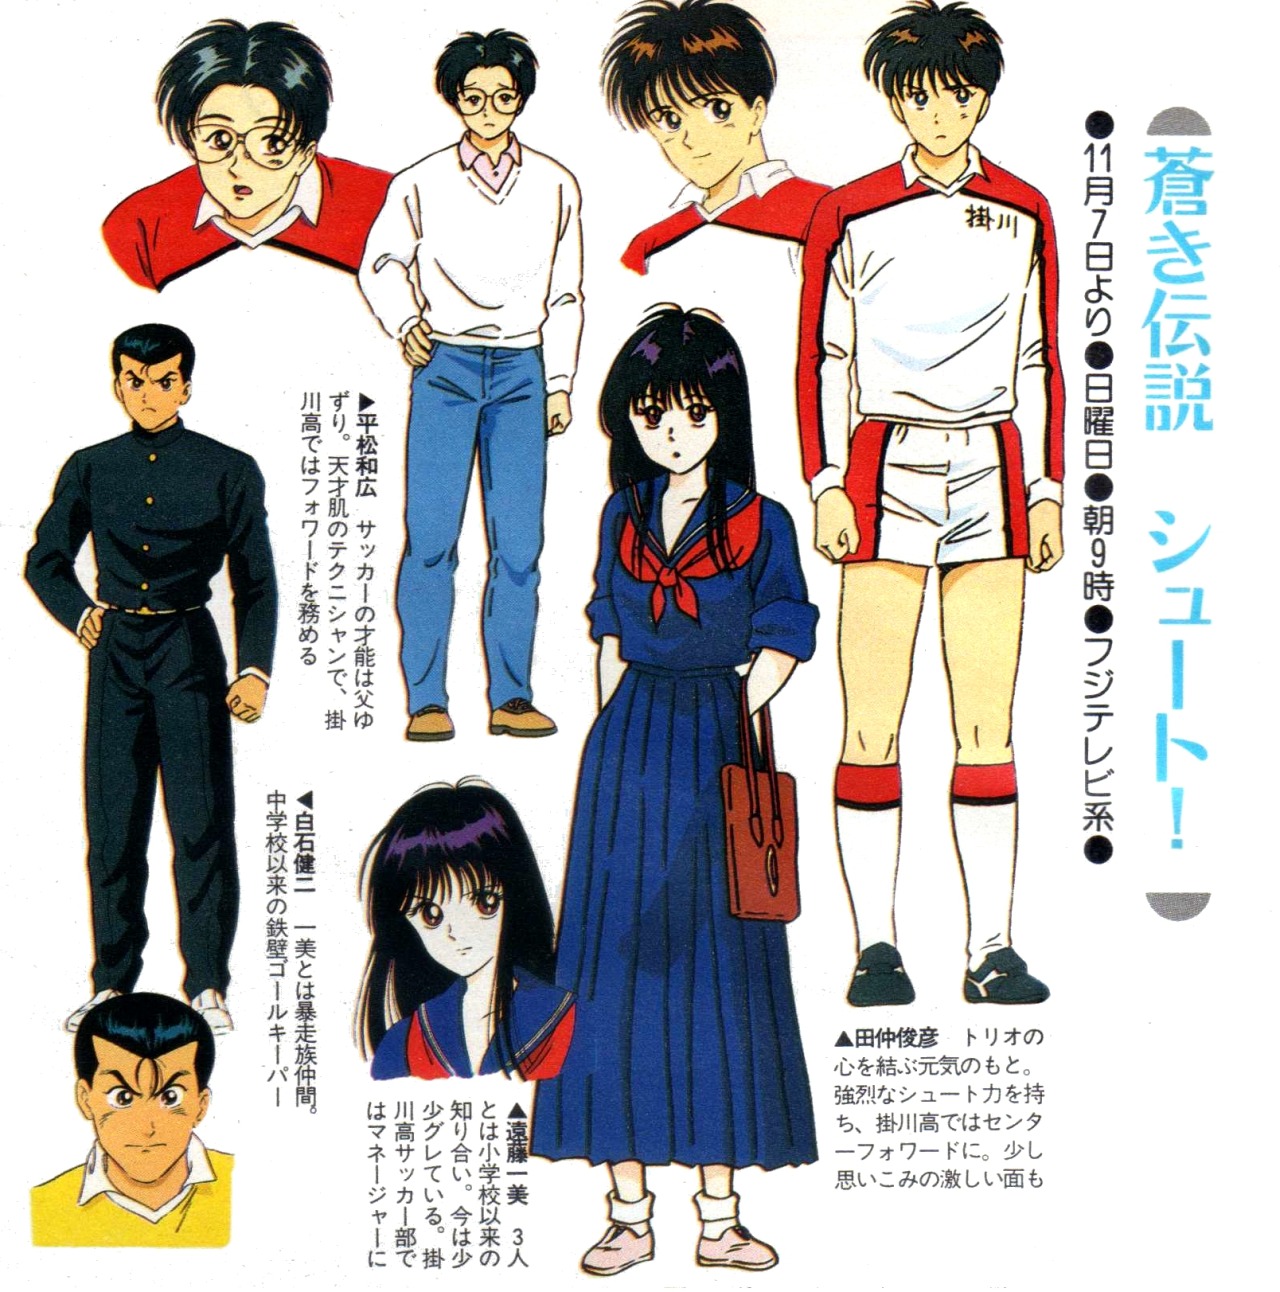 Anim Archive Aoki Densetsu Shoot Animage Magazine 11 1993